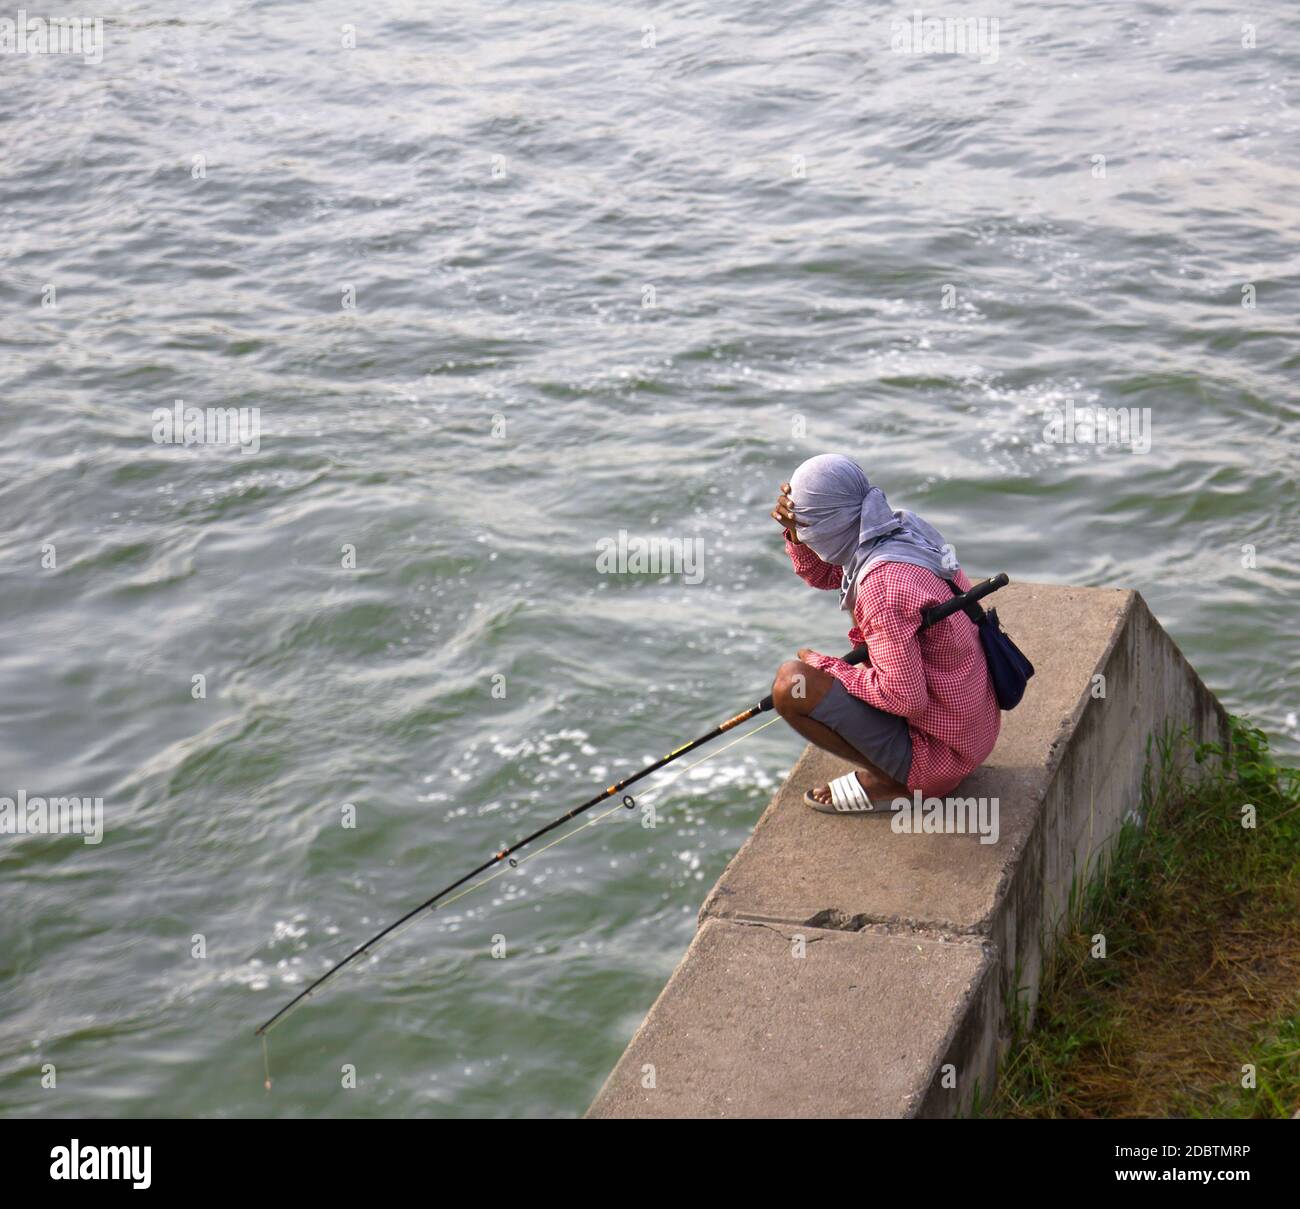 Fishermen waiting to catch a fish hook Stock Photo - Alamy